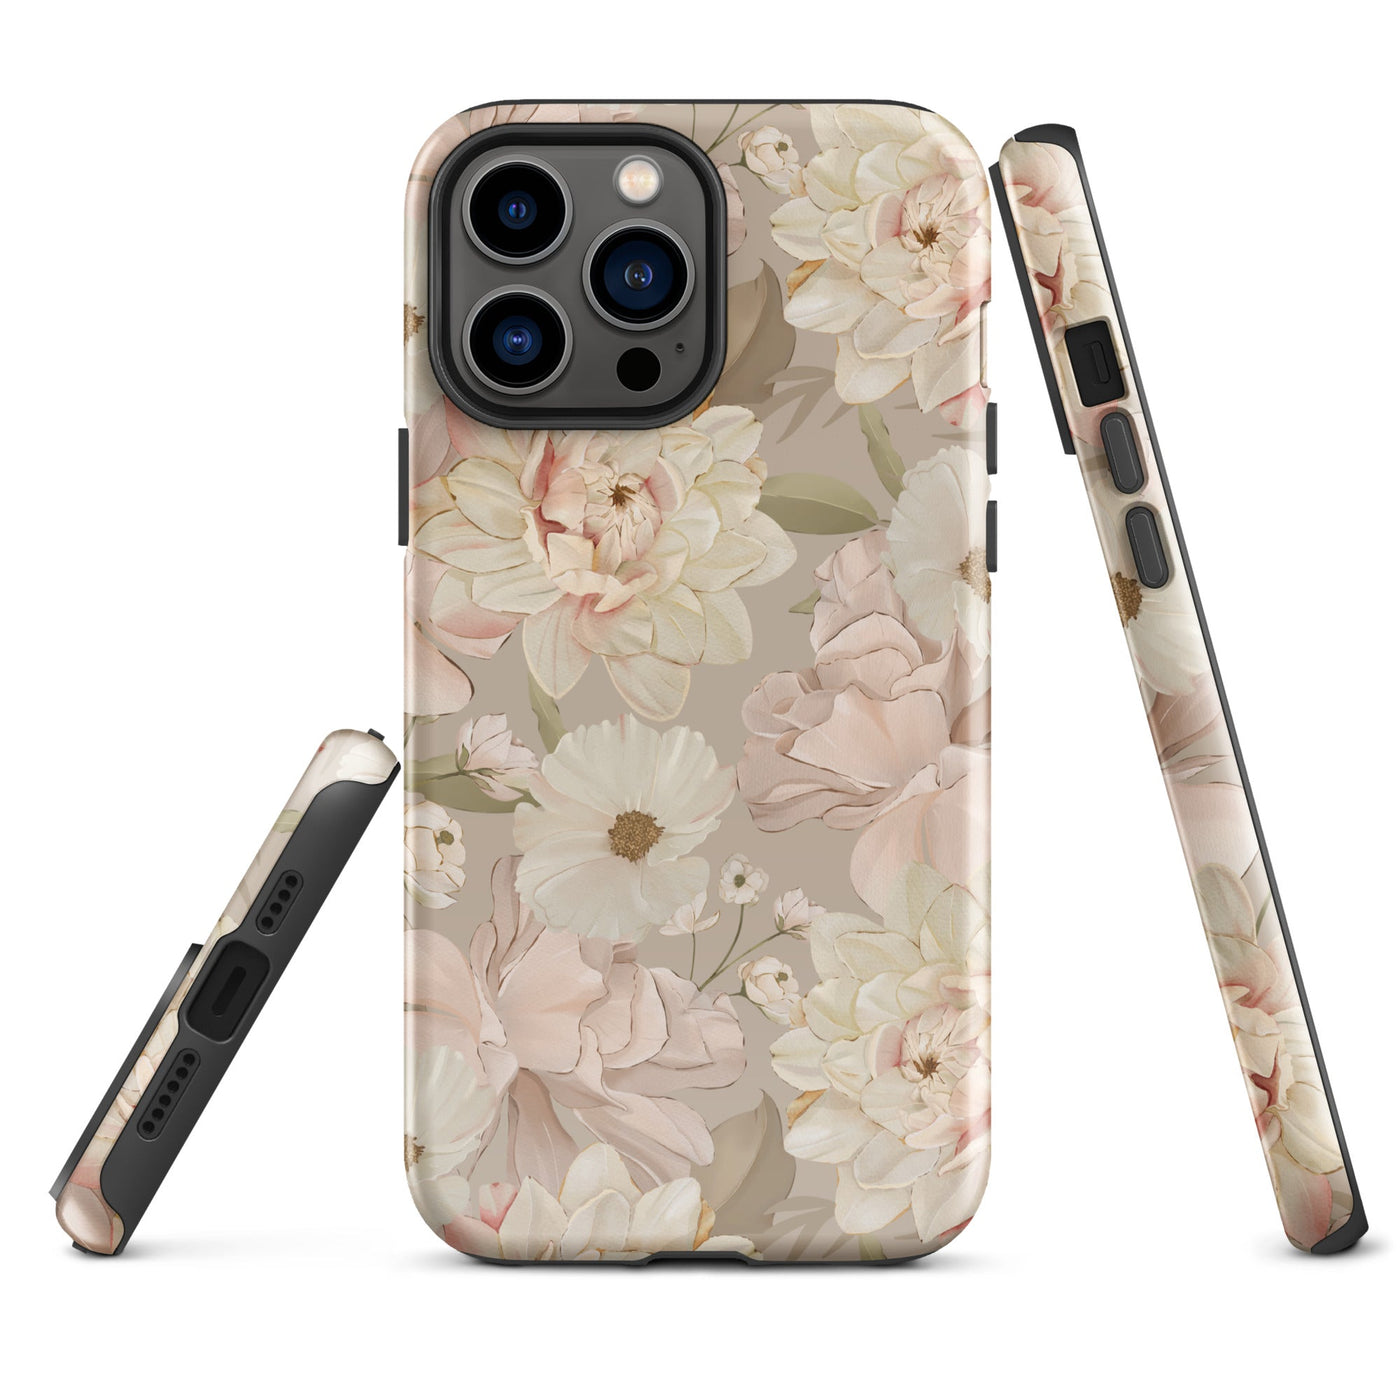 Tough iPhone Case in Blissful Flower - ALK DESIGNS